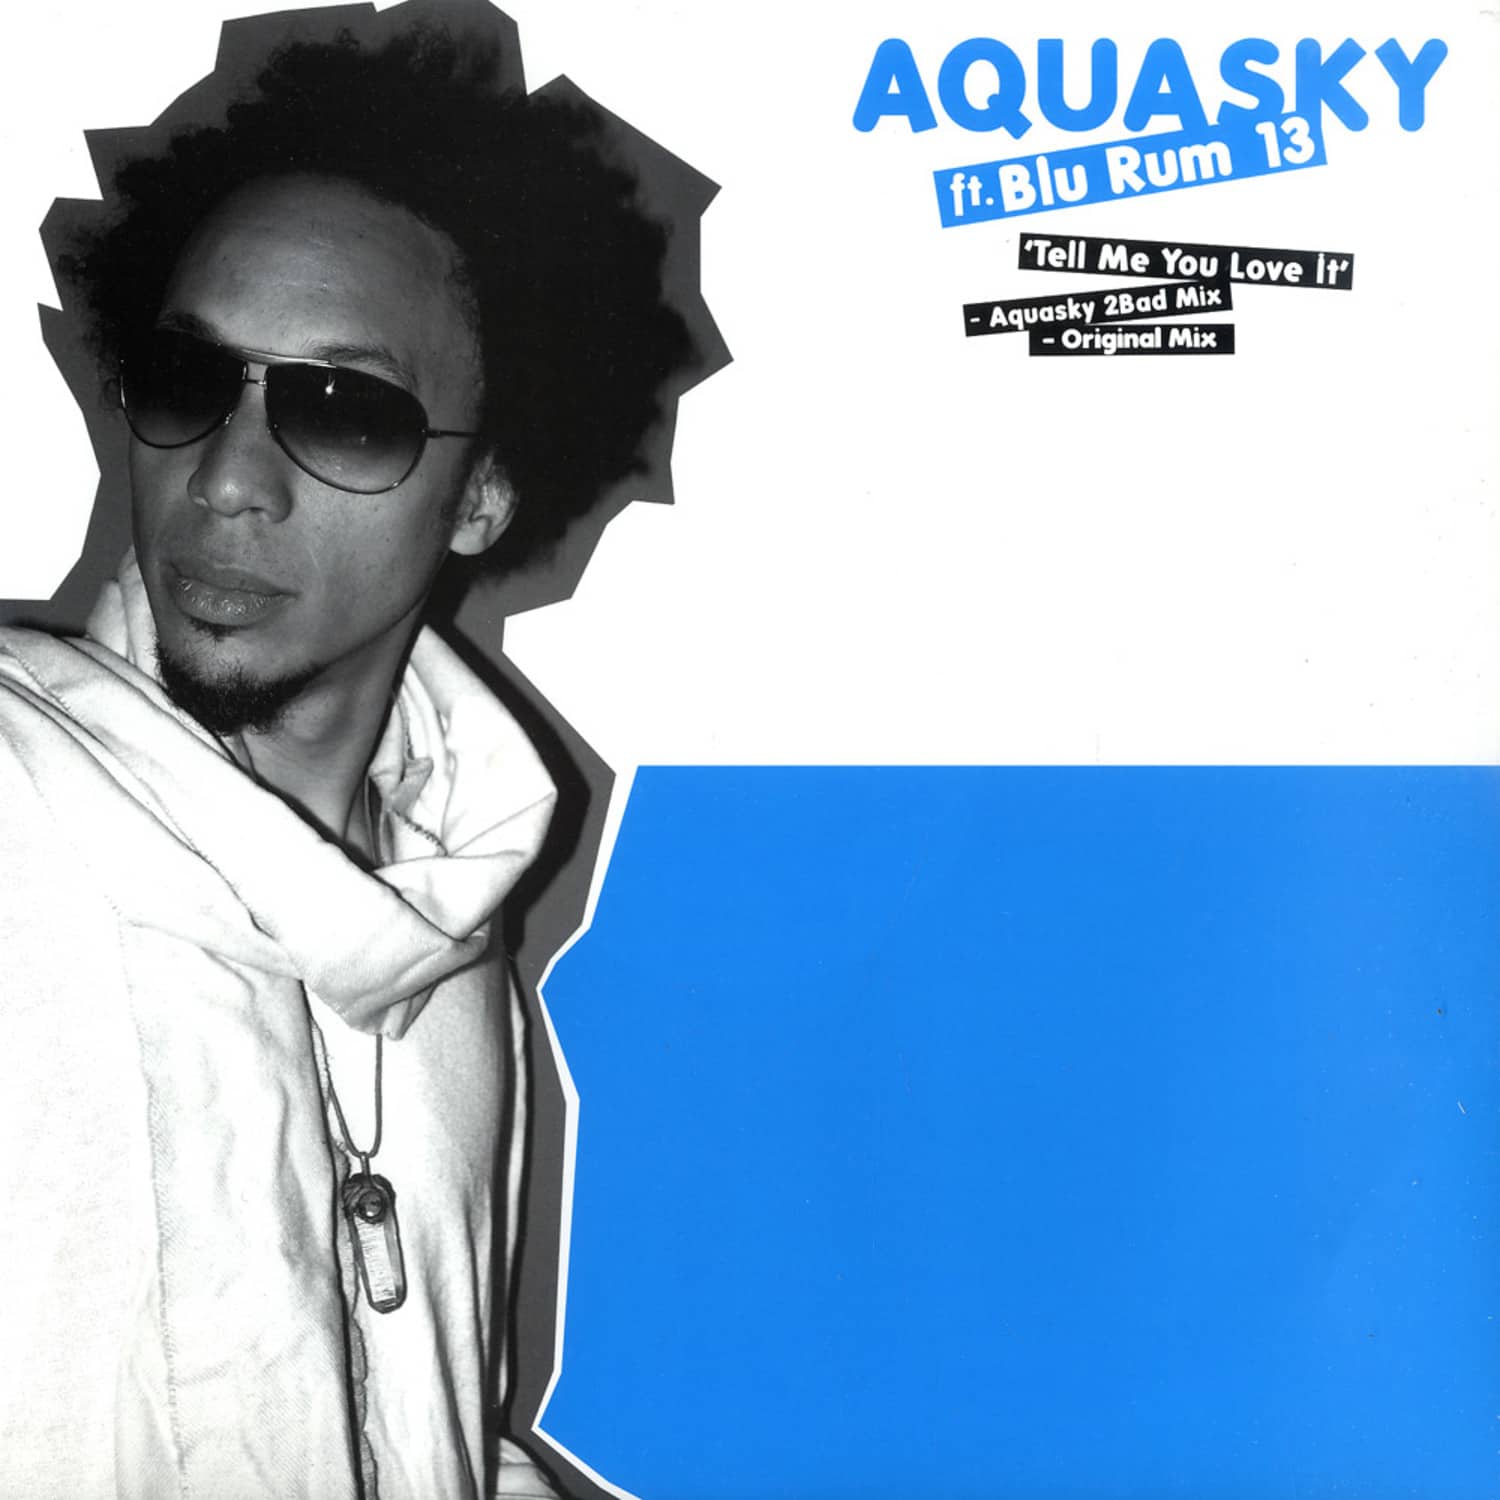 Aquasky feat. Blu Rum - TELL ME YOU LOVE IT